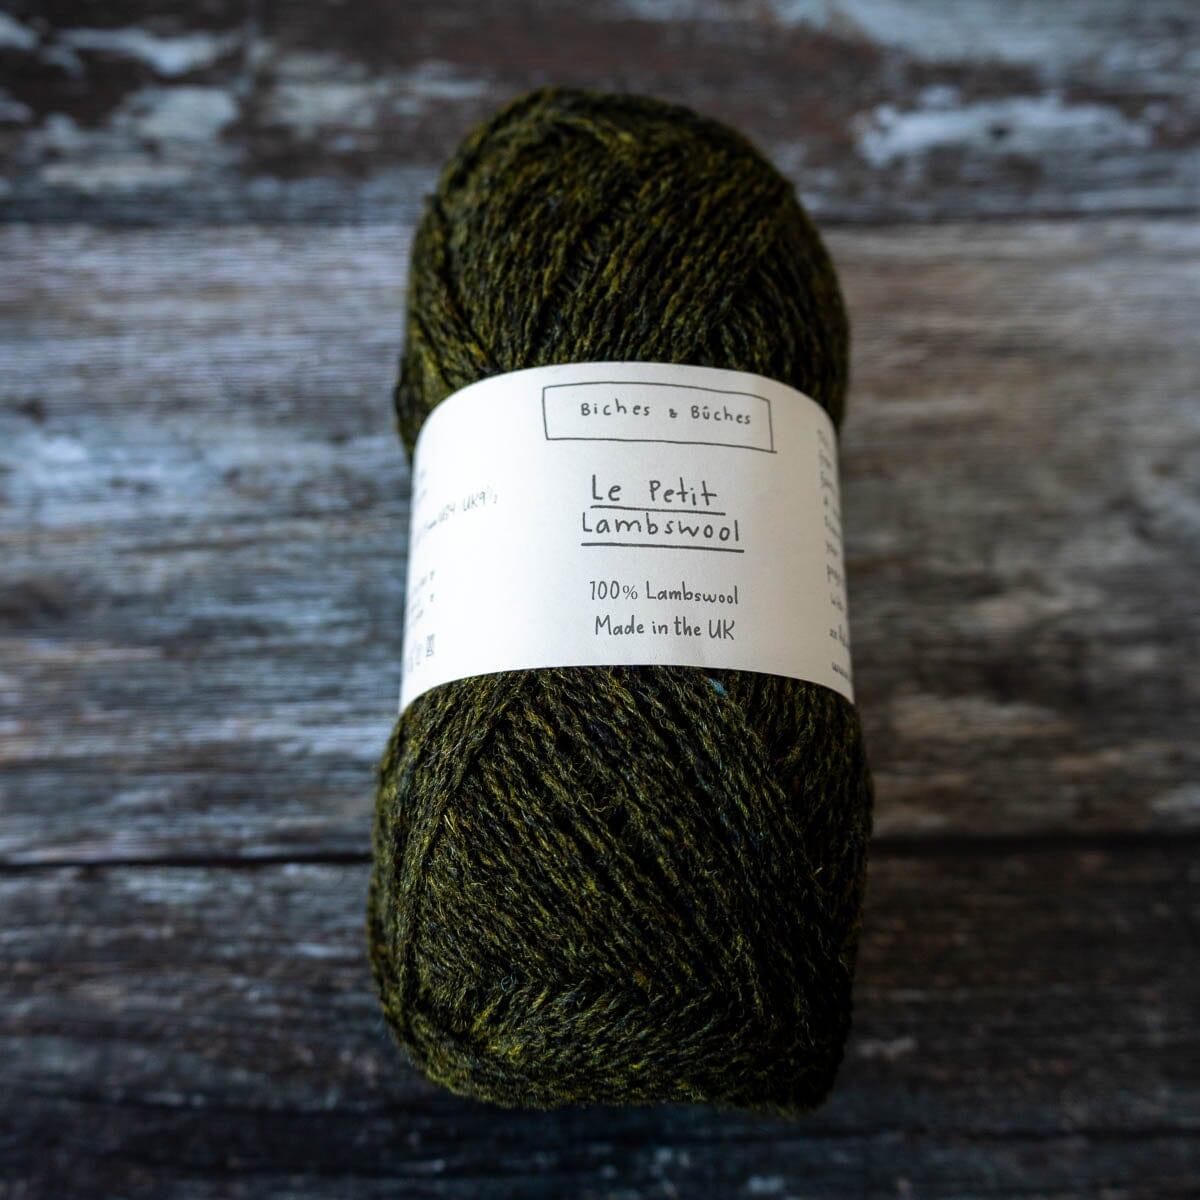 Biches & Bûches Biches & Bûches Le Petit Lambswool - Dark Green Grey - 4ply Knitting Yarn